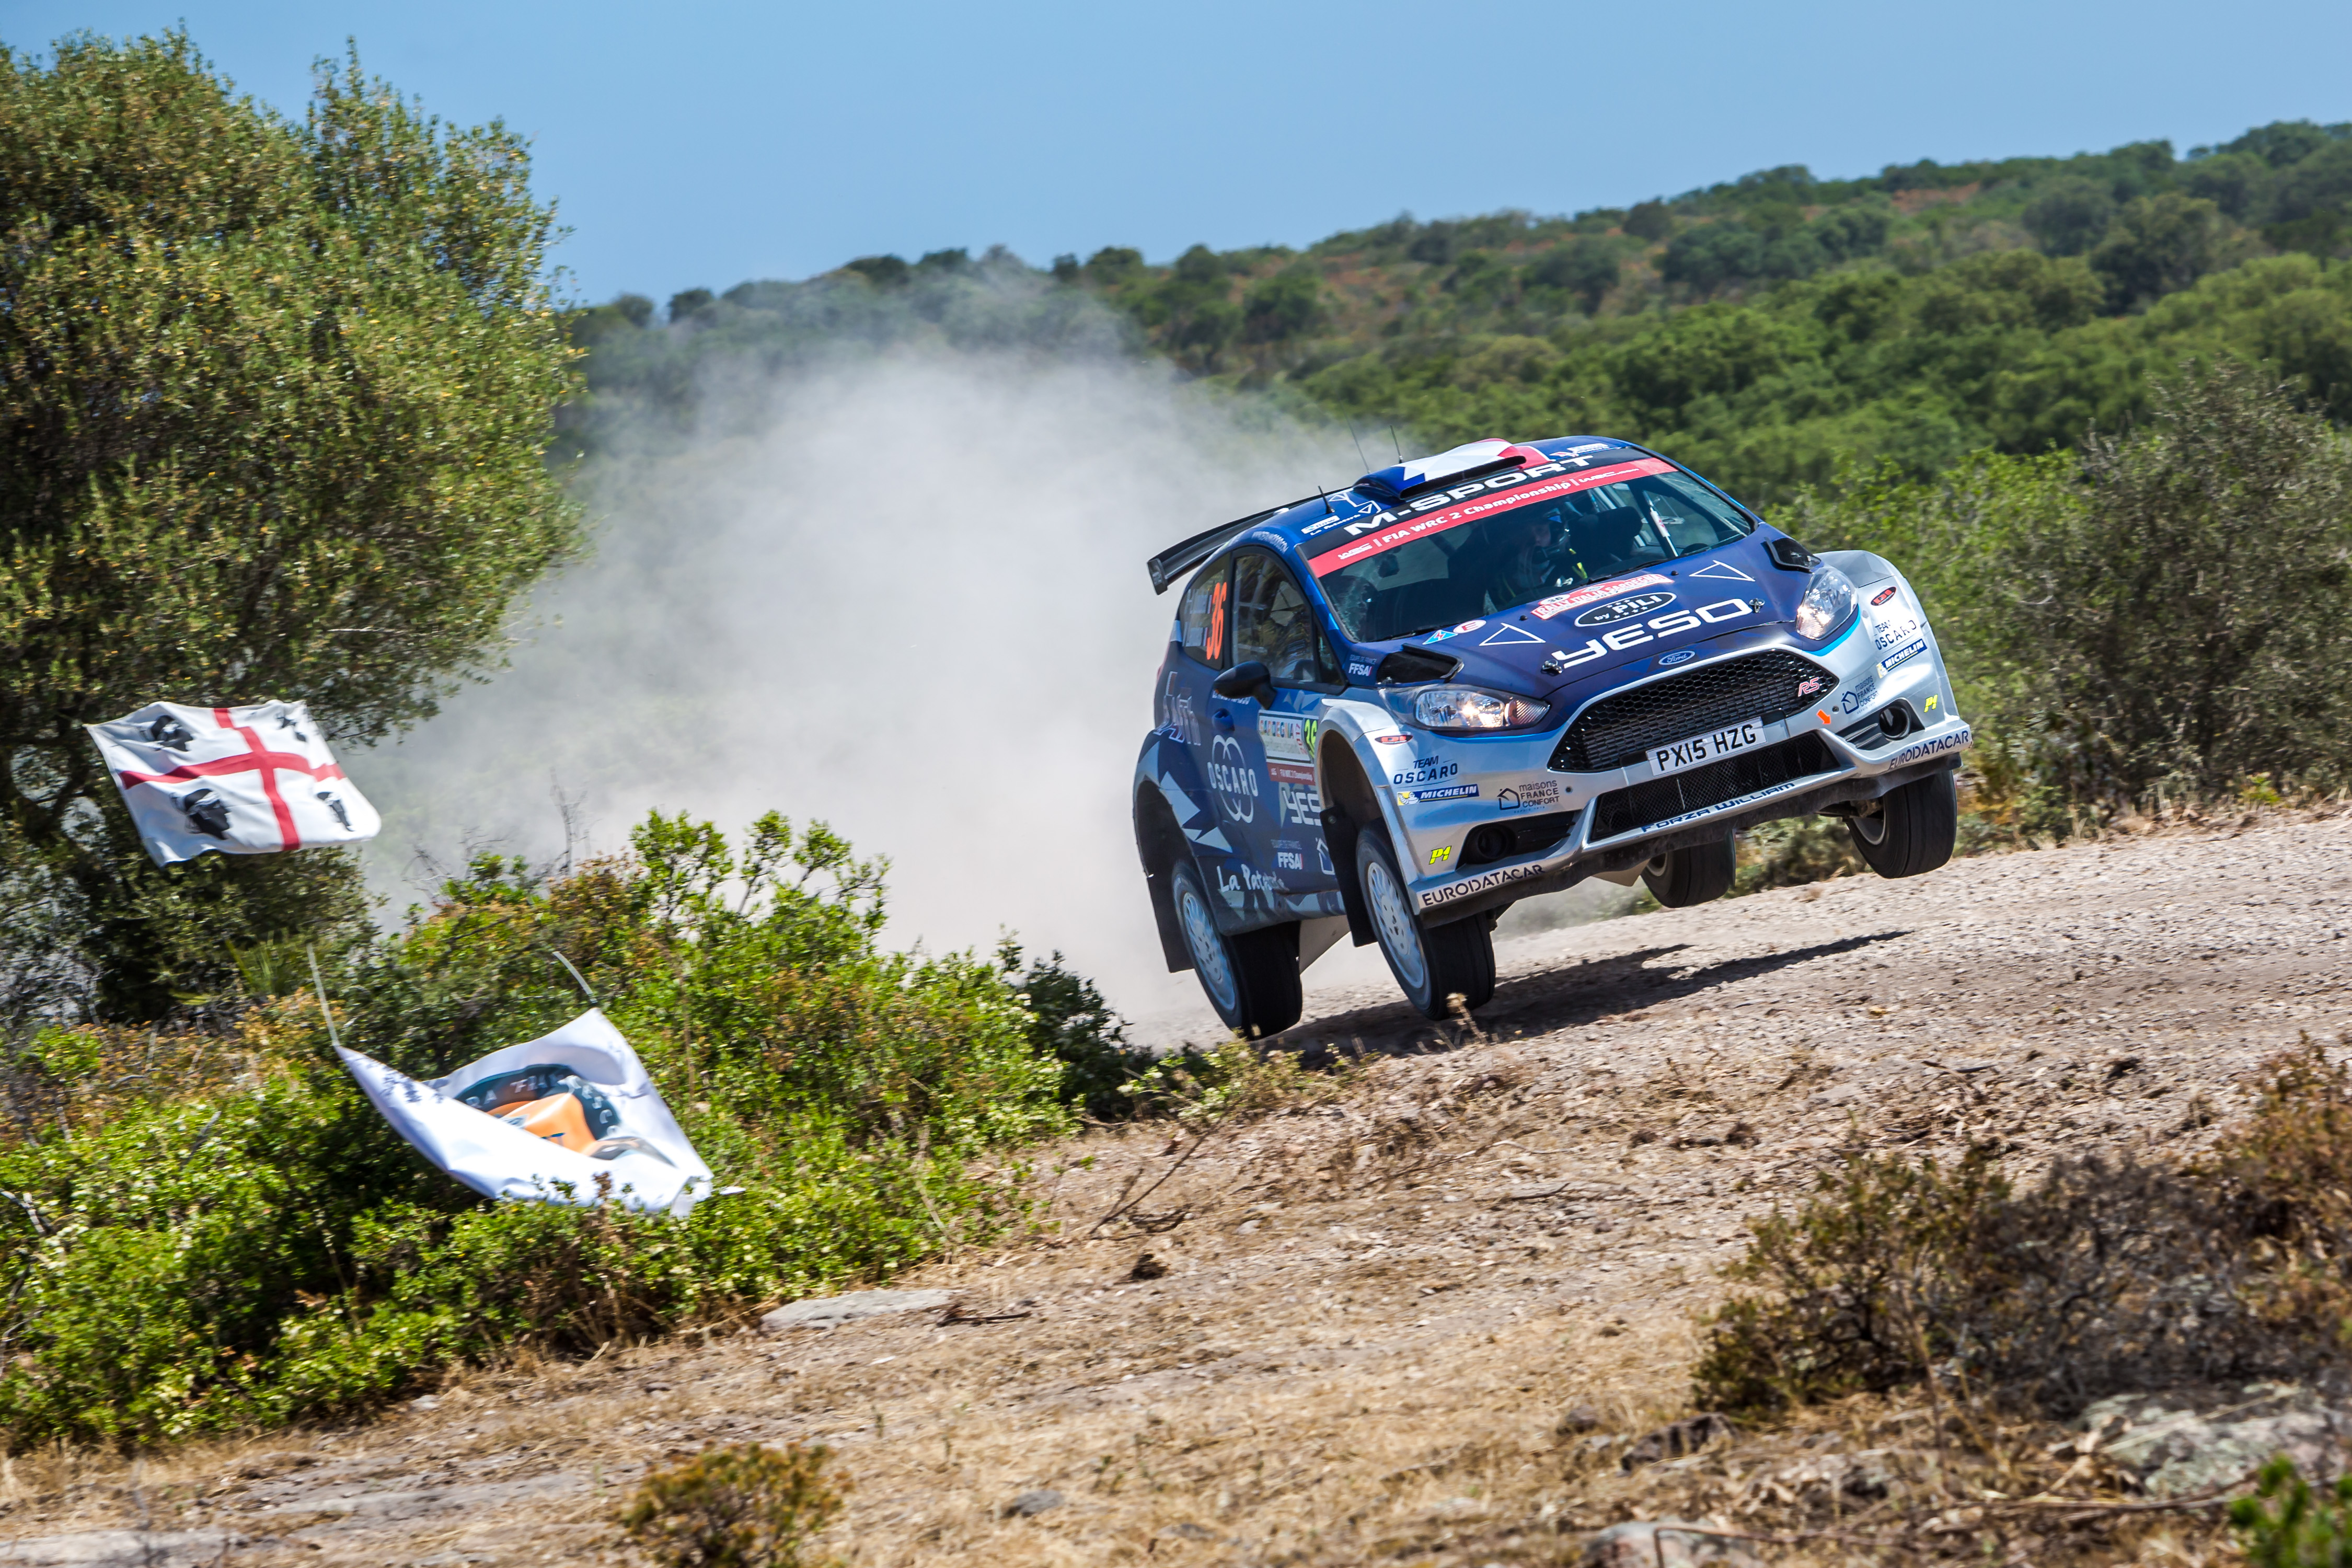 WRC - 2017 Rally Italia Sardegna | Federation Internationale de l'Automobile